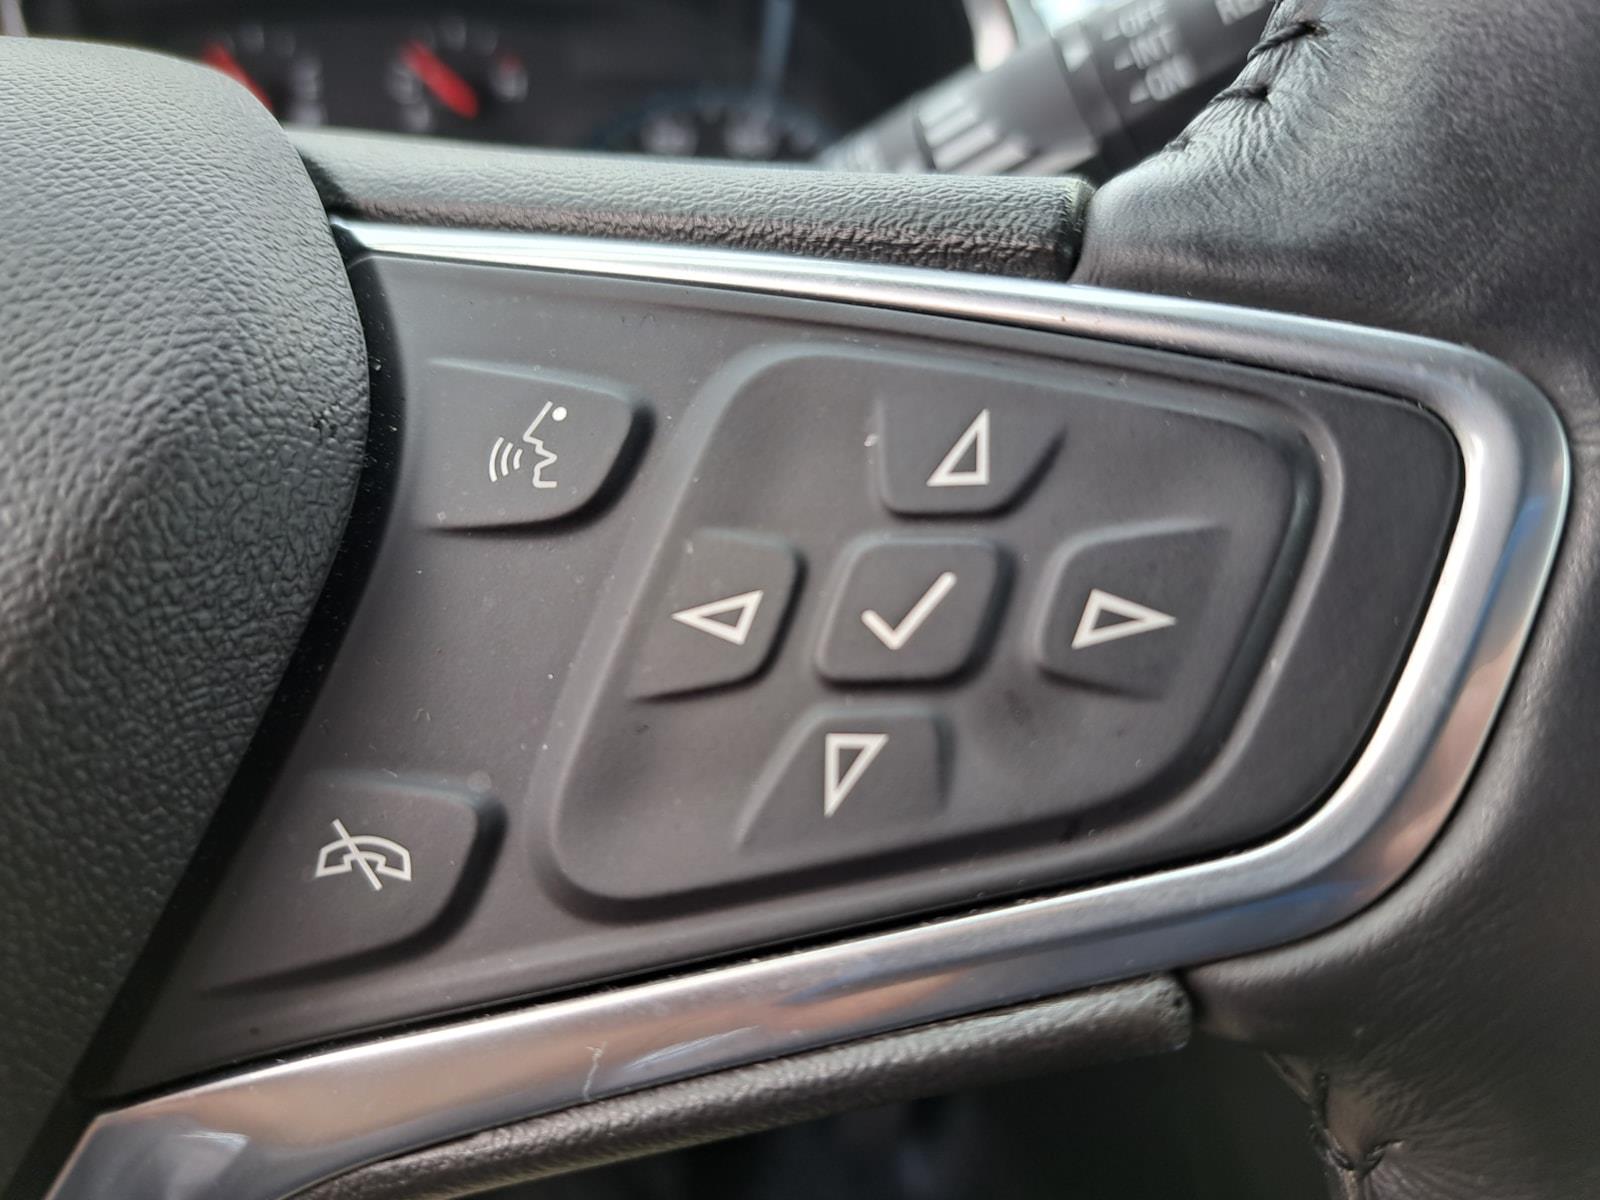 2018 Chevrolet Equinox LT SUV Front Wheel Drive 16